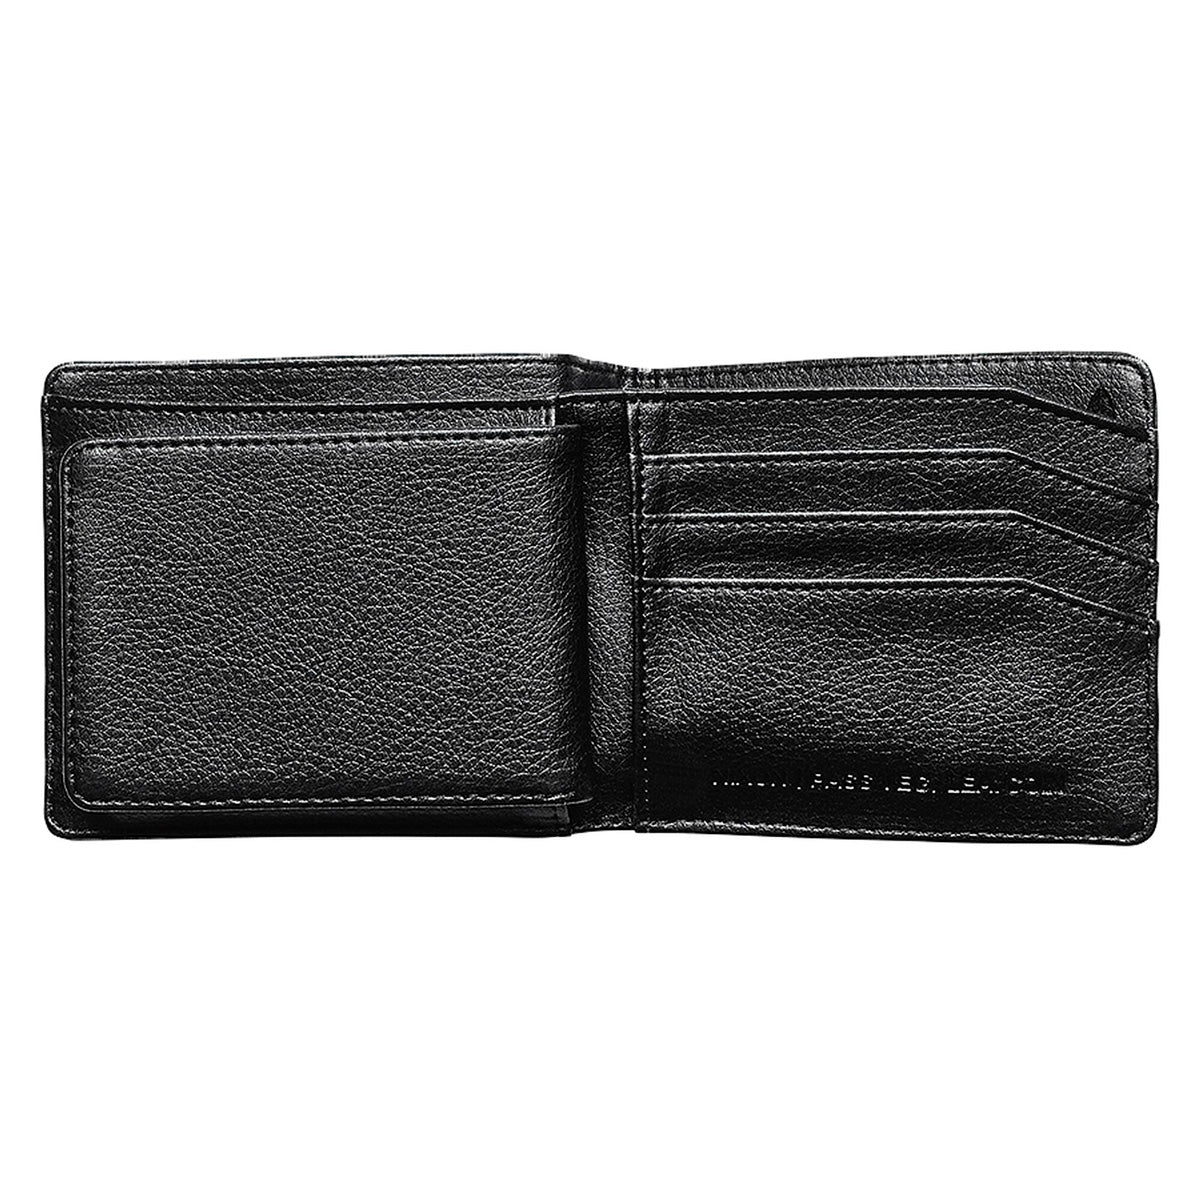 Nixon Pass Vegan Leather Coin Wallet Black. Foto da carteira aberta.